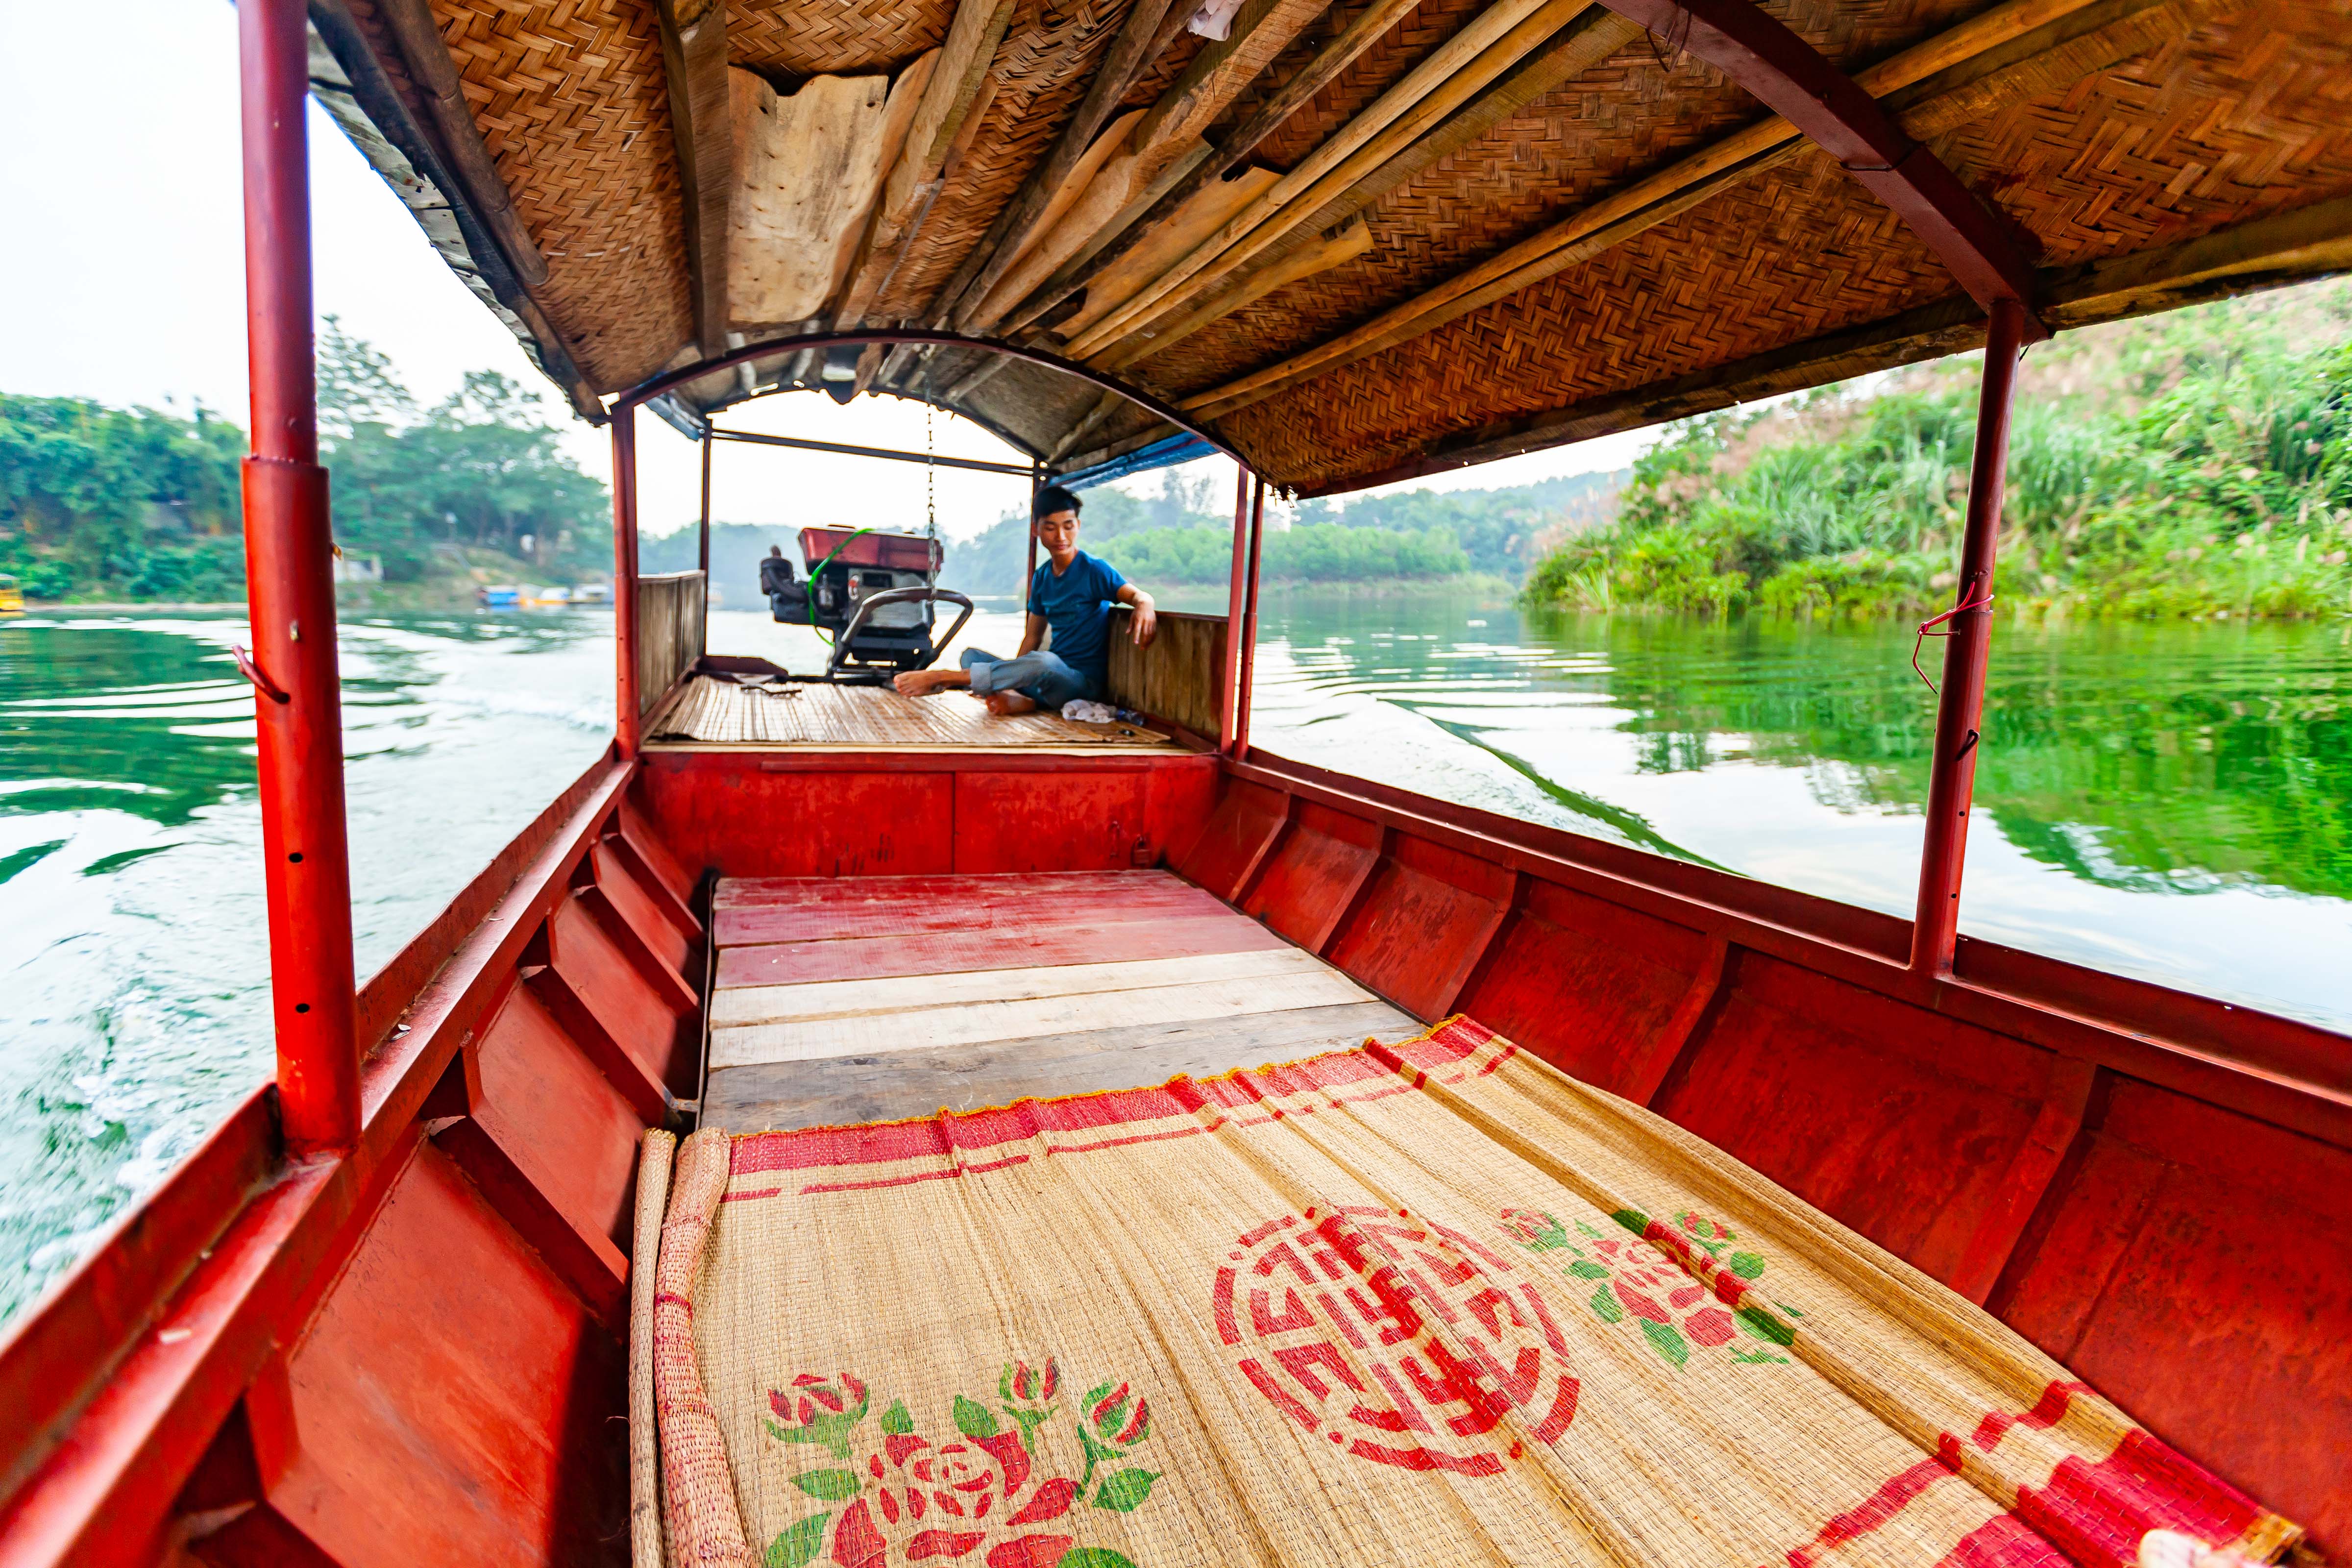 Vietnam, Yen Bai Prov, Boat, 2011, IMG 1100